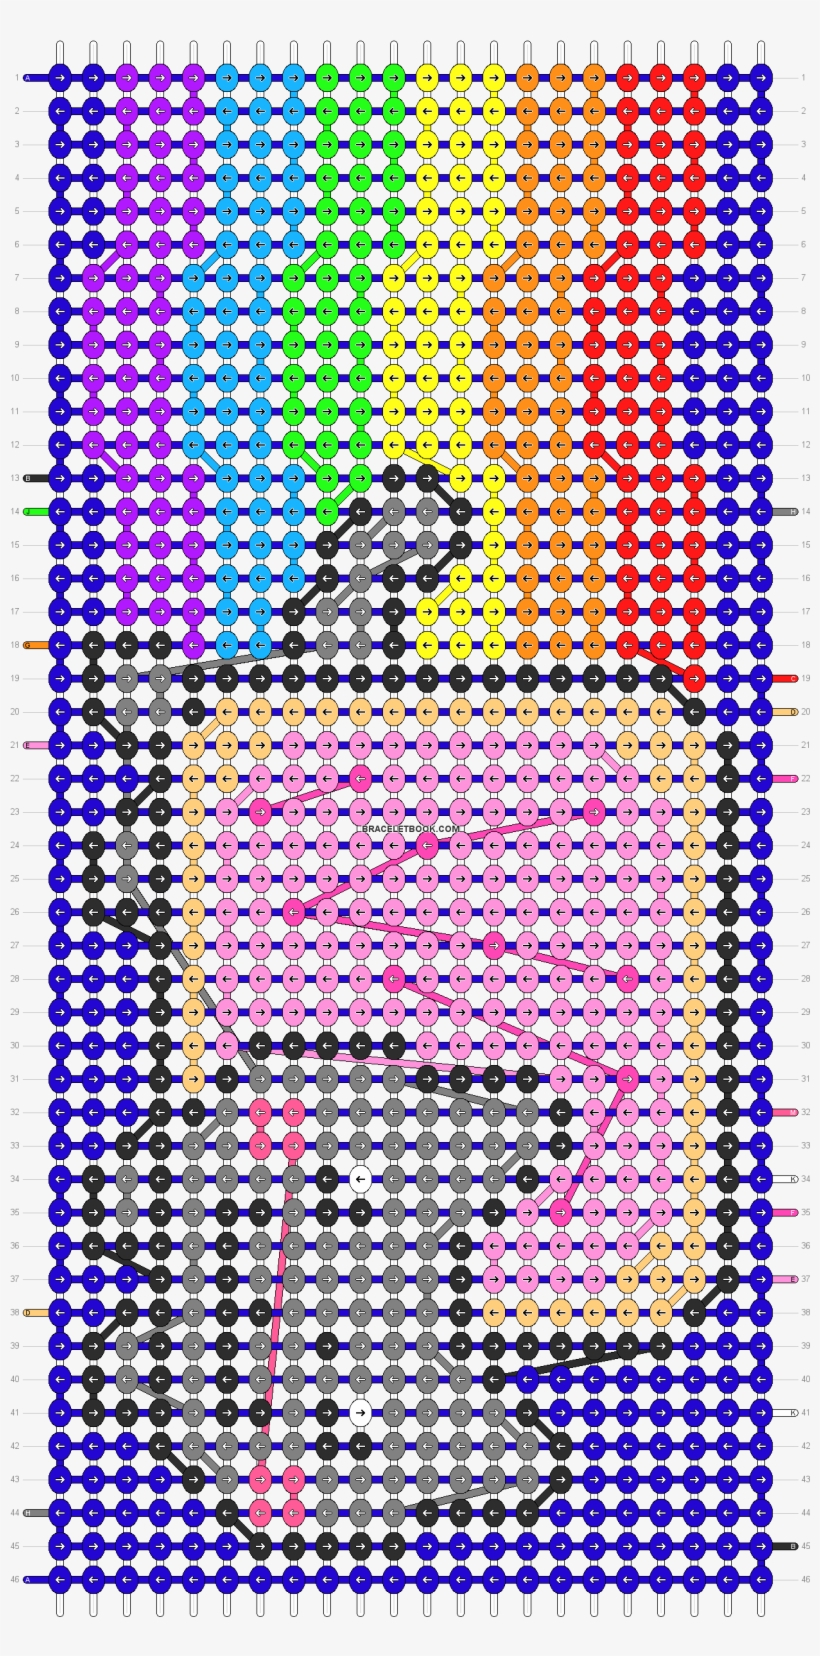 Alpha Pattern - Friendship Bracelet Patterns Cat, transparent png #3867674